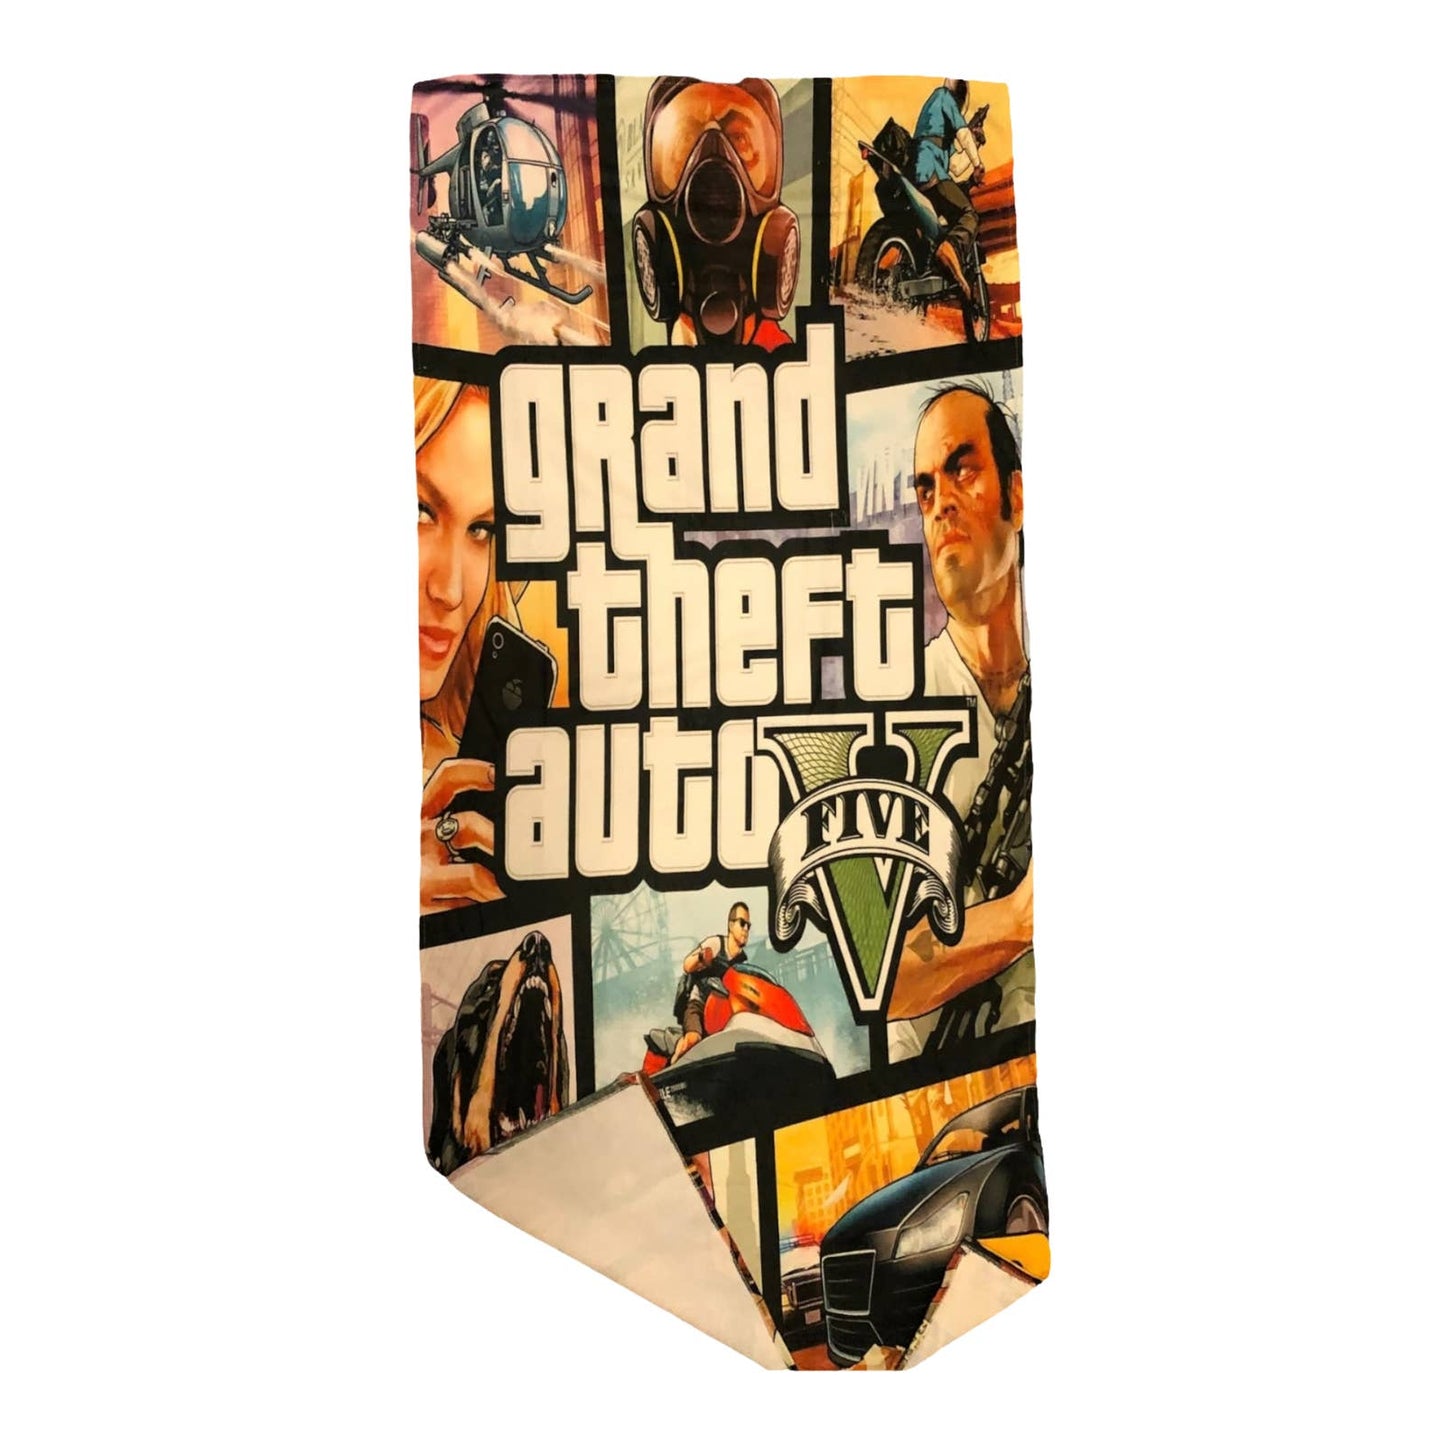 Grand Theft Auto 5 Lightweight Microfiber Beach Towel